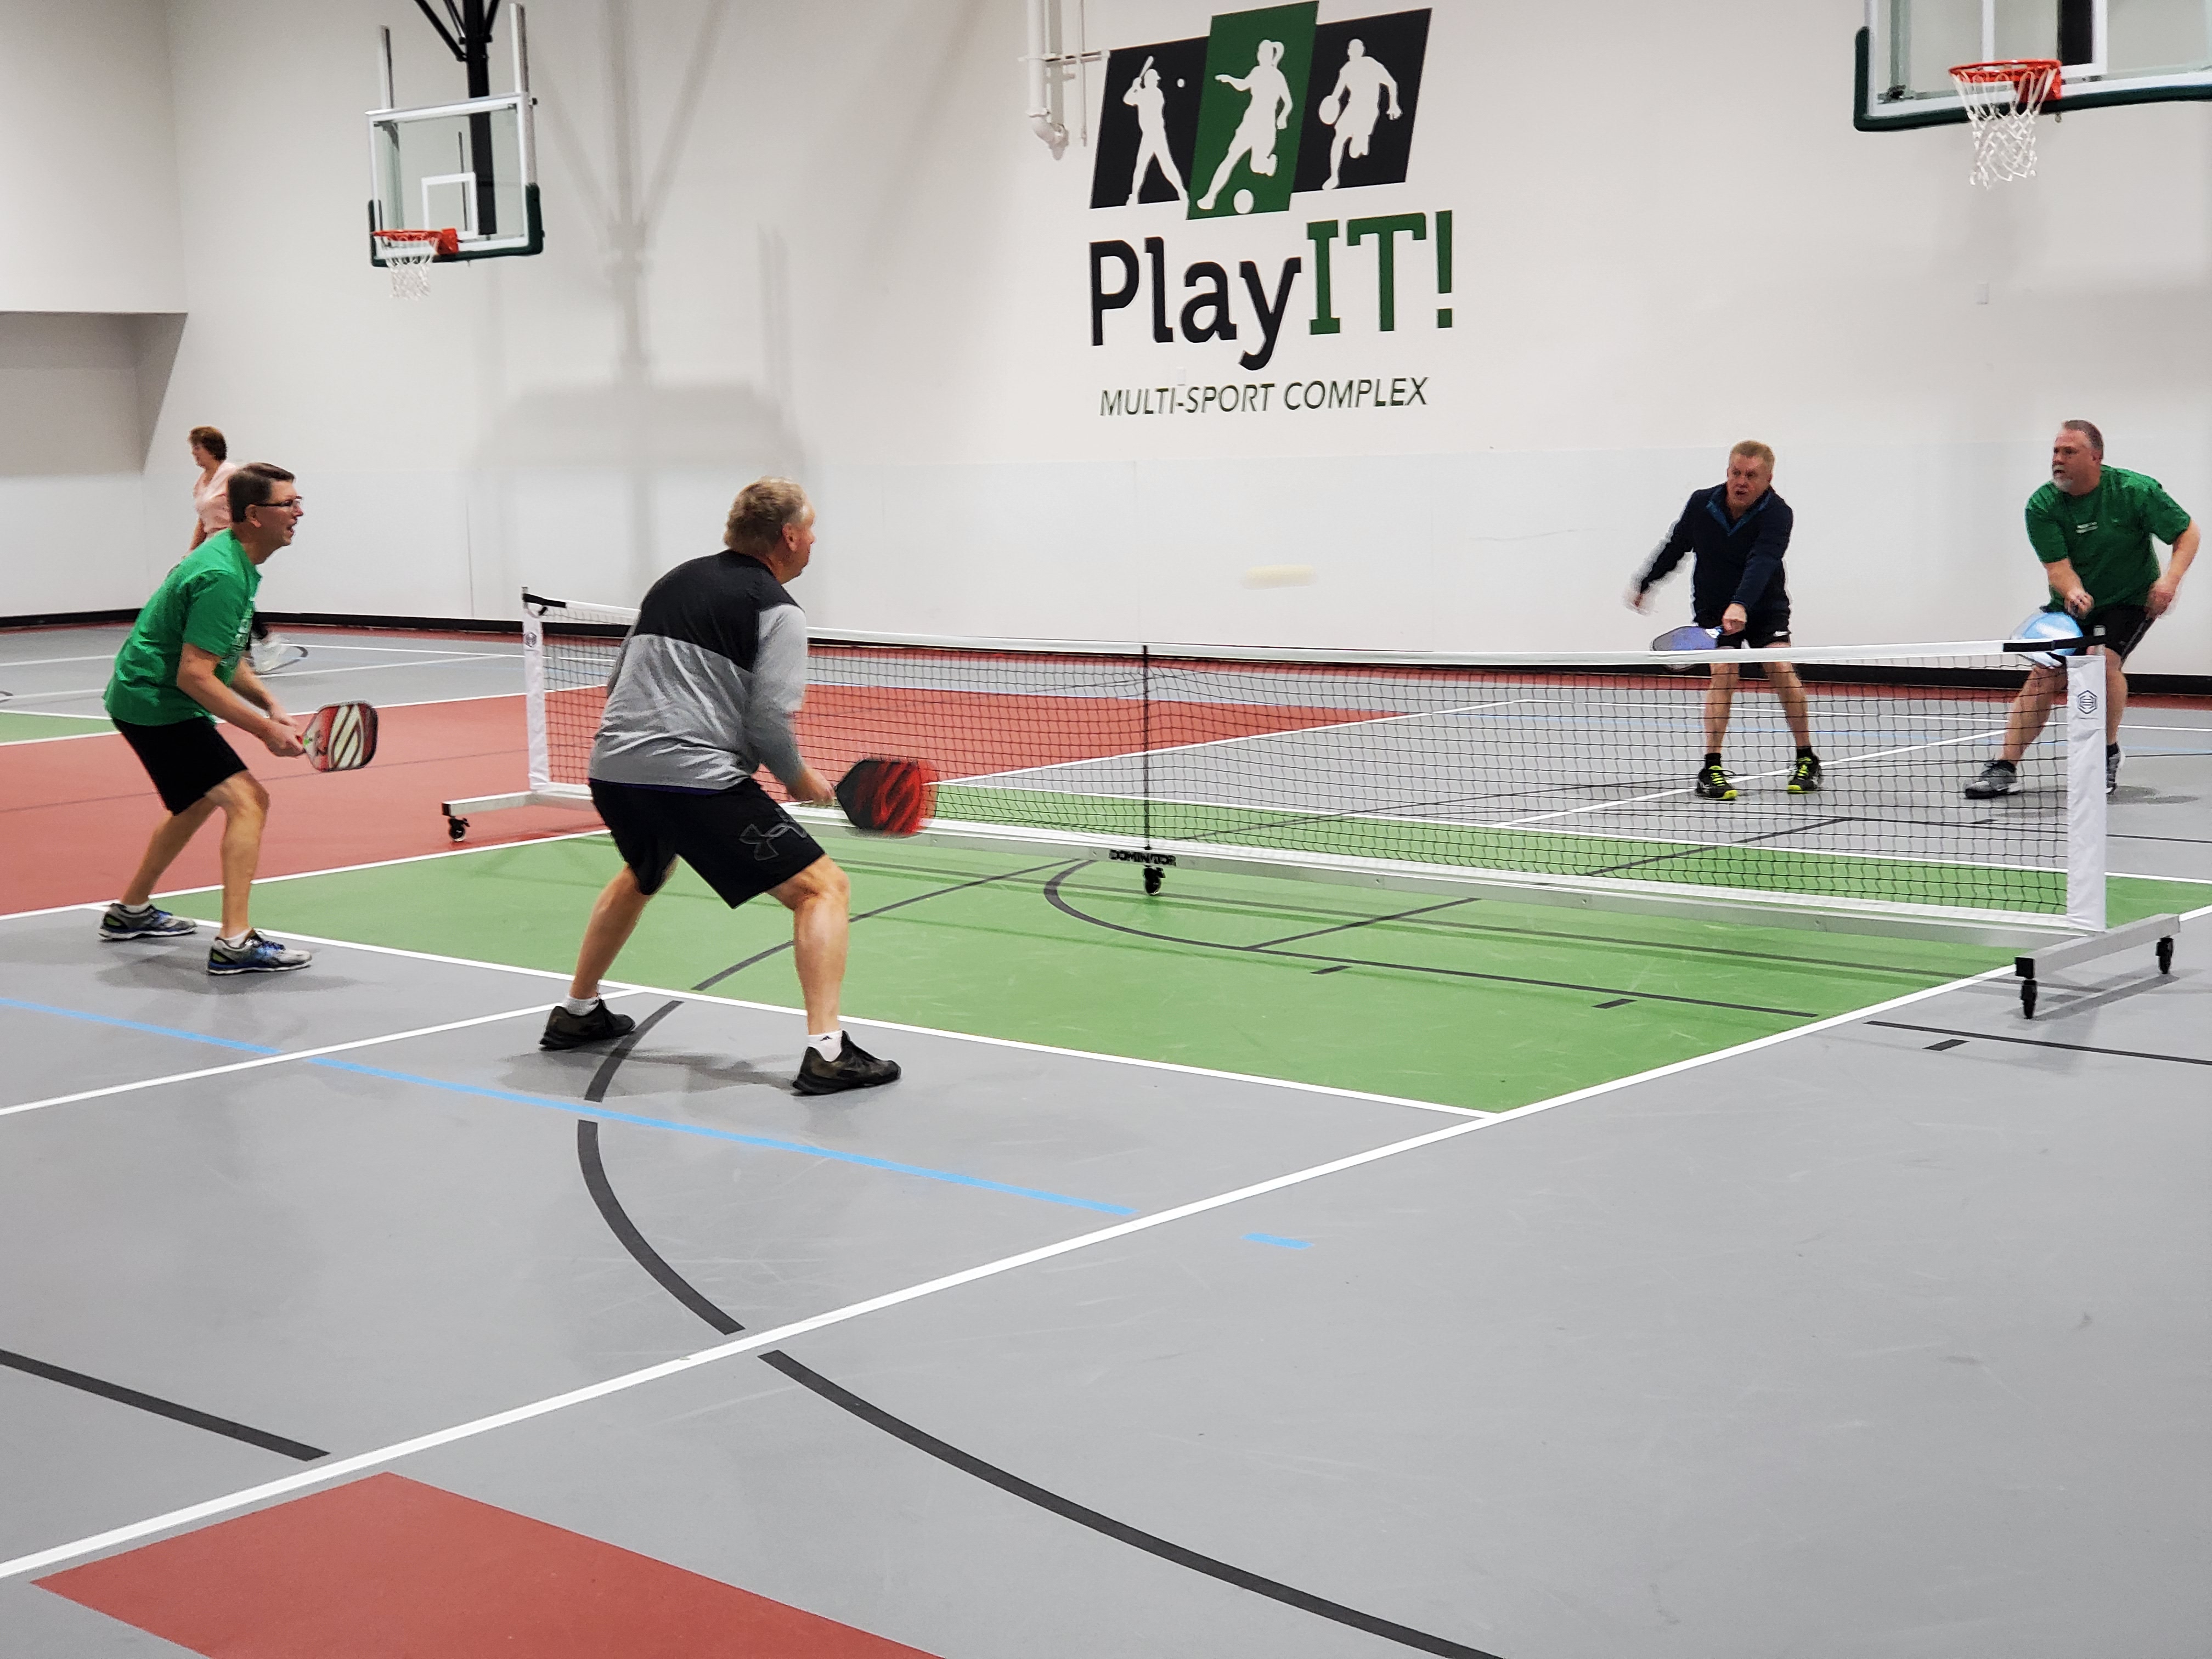 PlayIT! Multi-Sport Complex – Sports! Recreation! Fun!